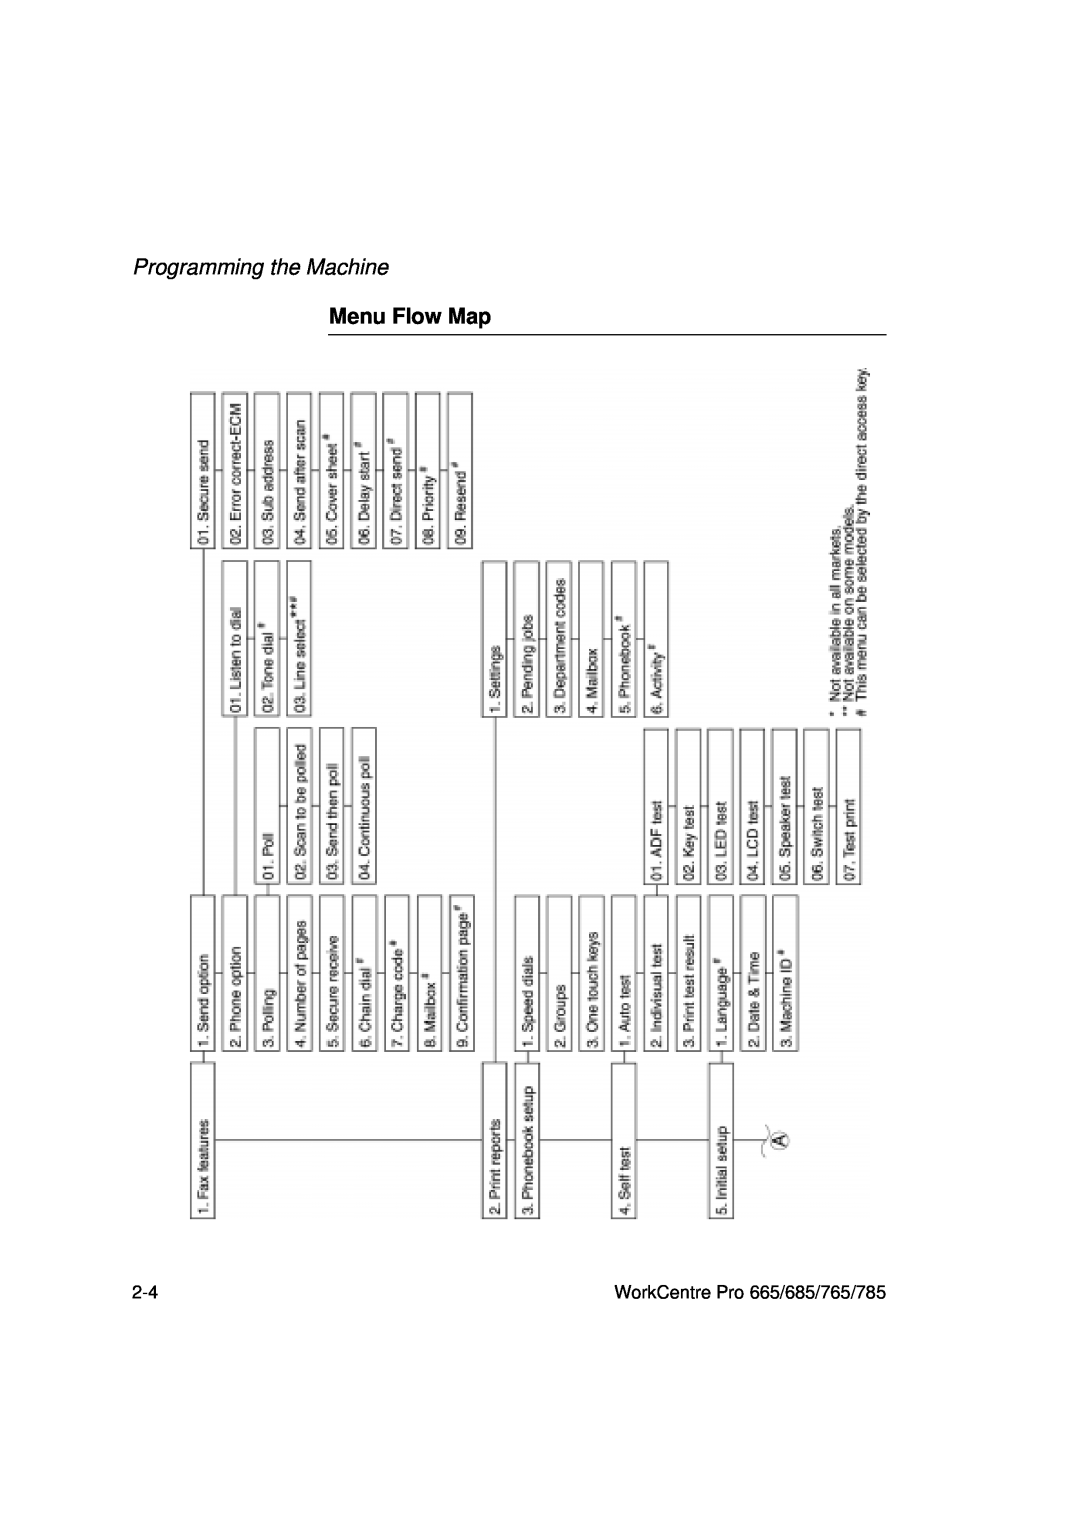 Xerox manual Menu Flow Map, Programming the Machine, WorkCentre Pro 665/685/765/785 